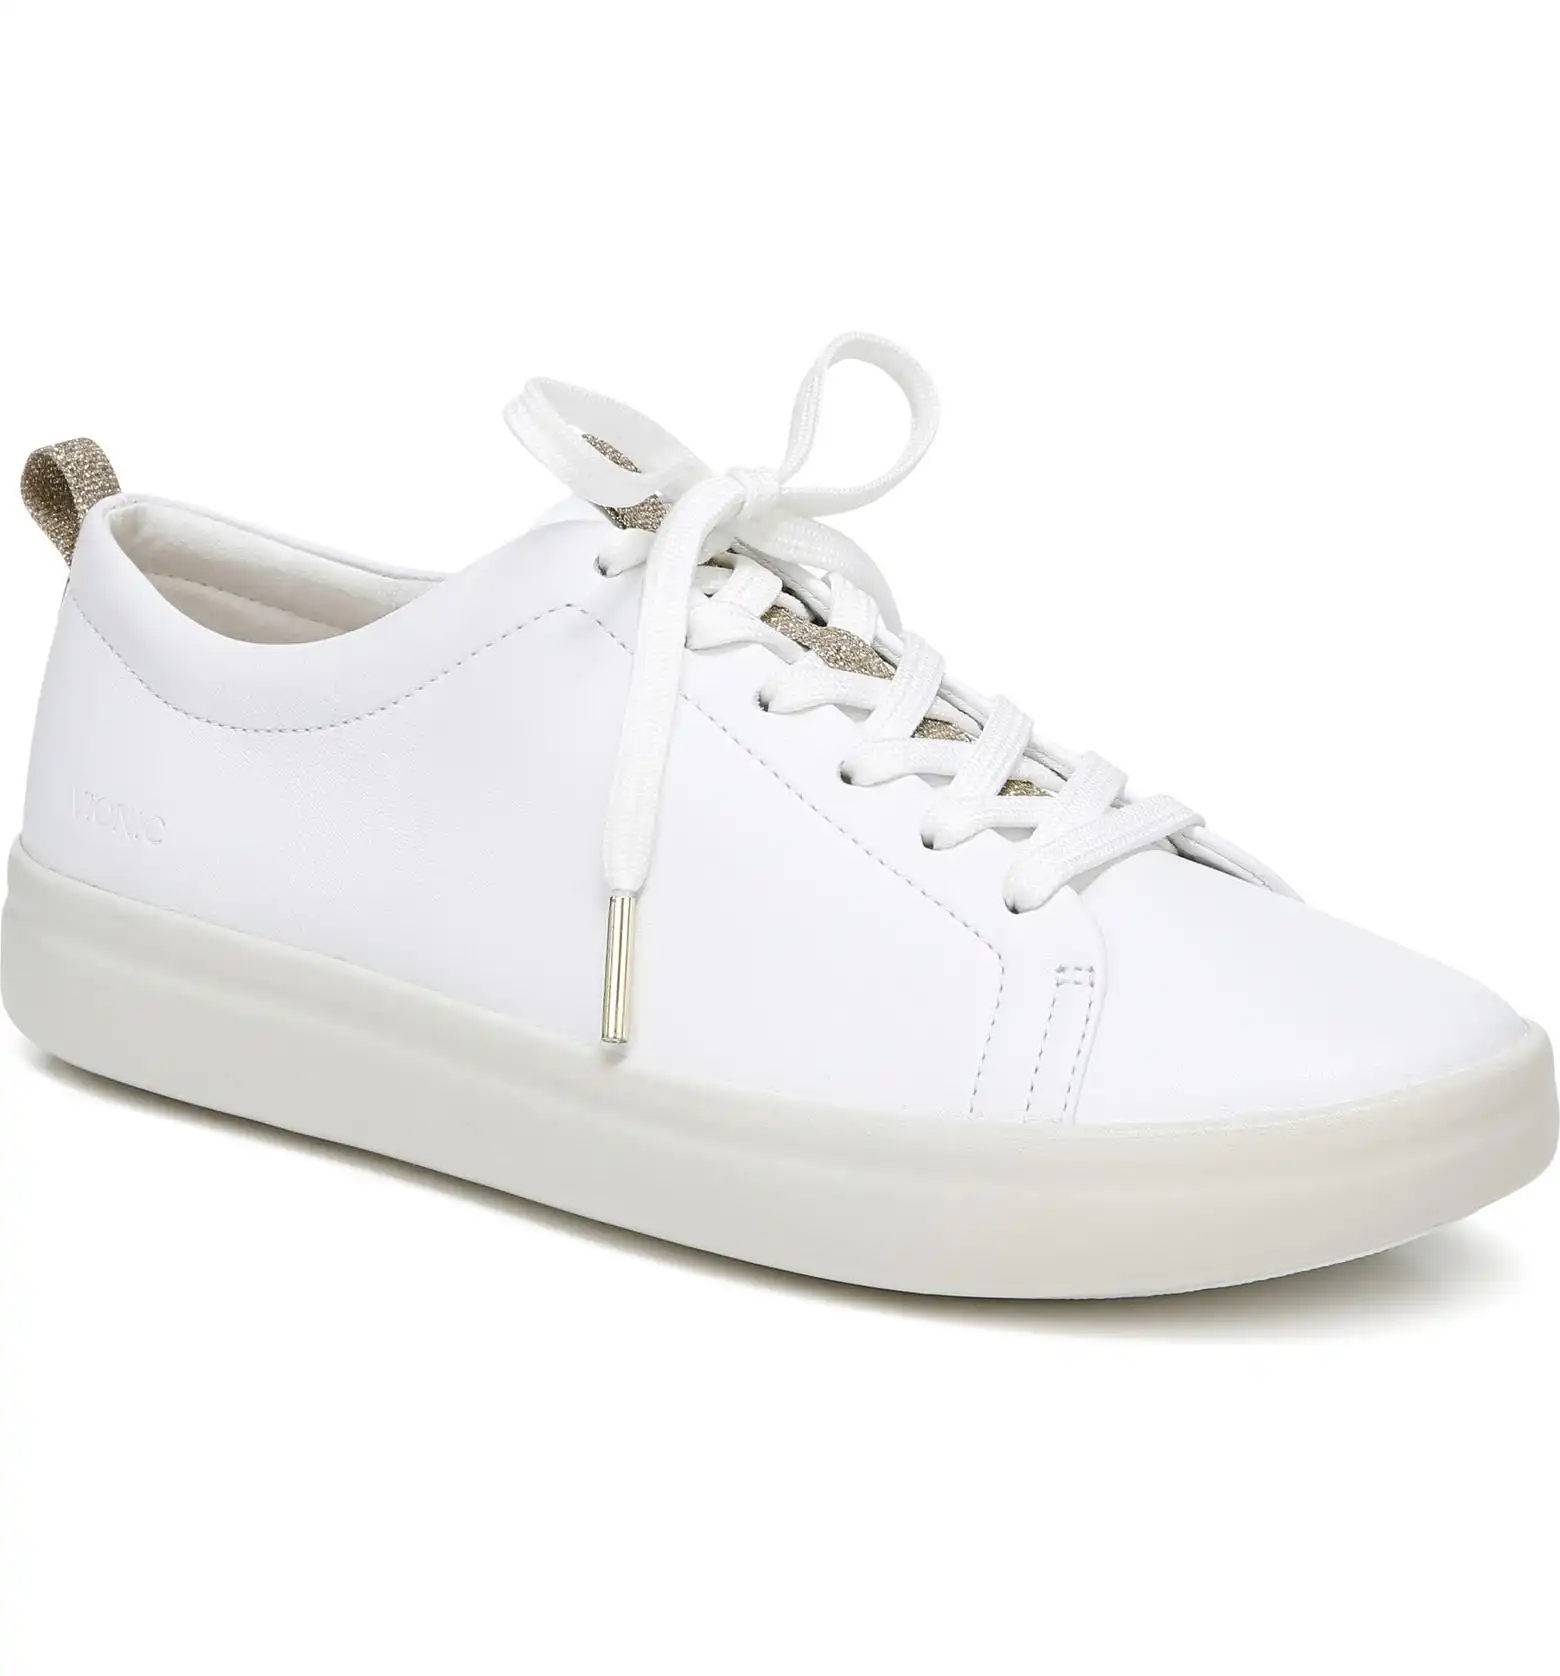 Vionic Aura Paisley Sneaker in White